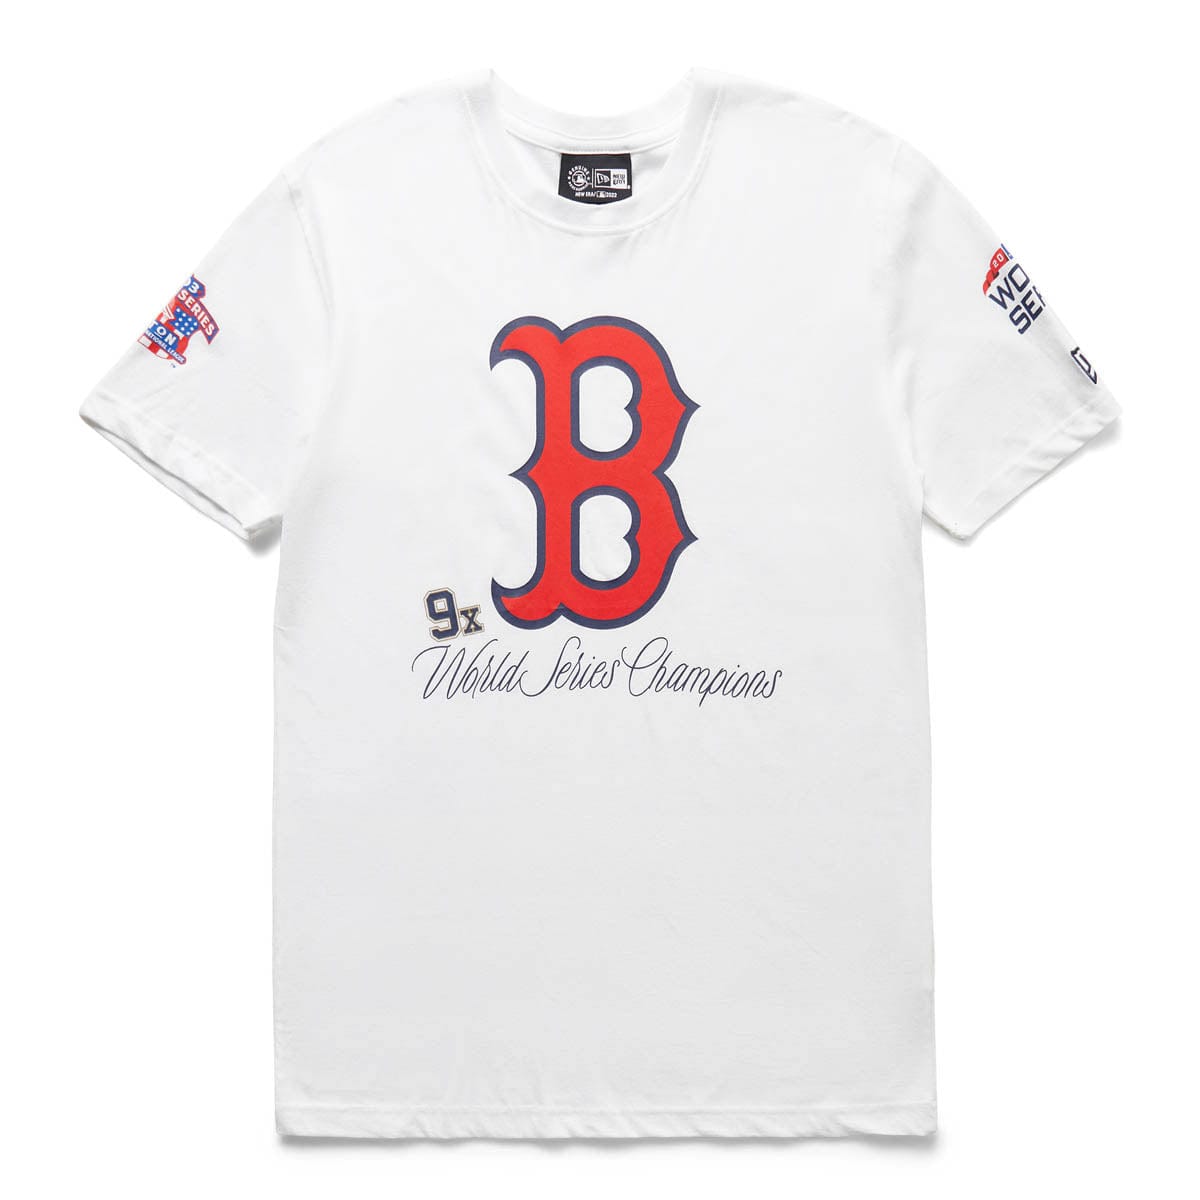 boston red sox championship shirt